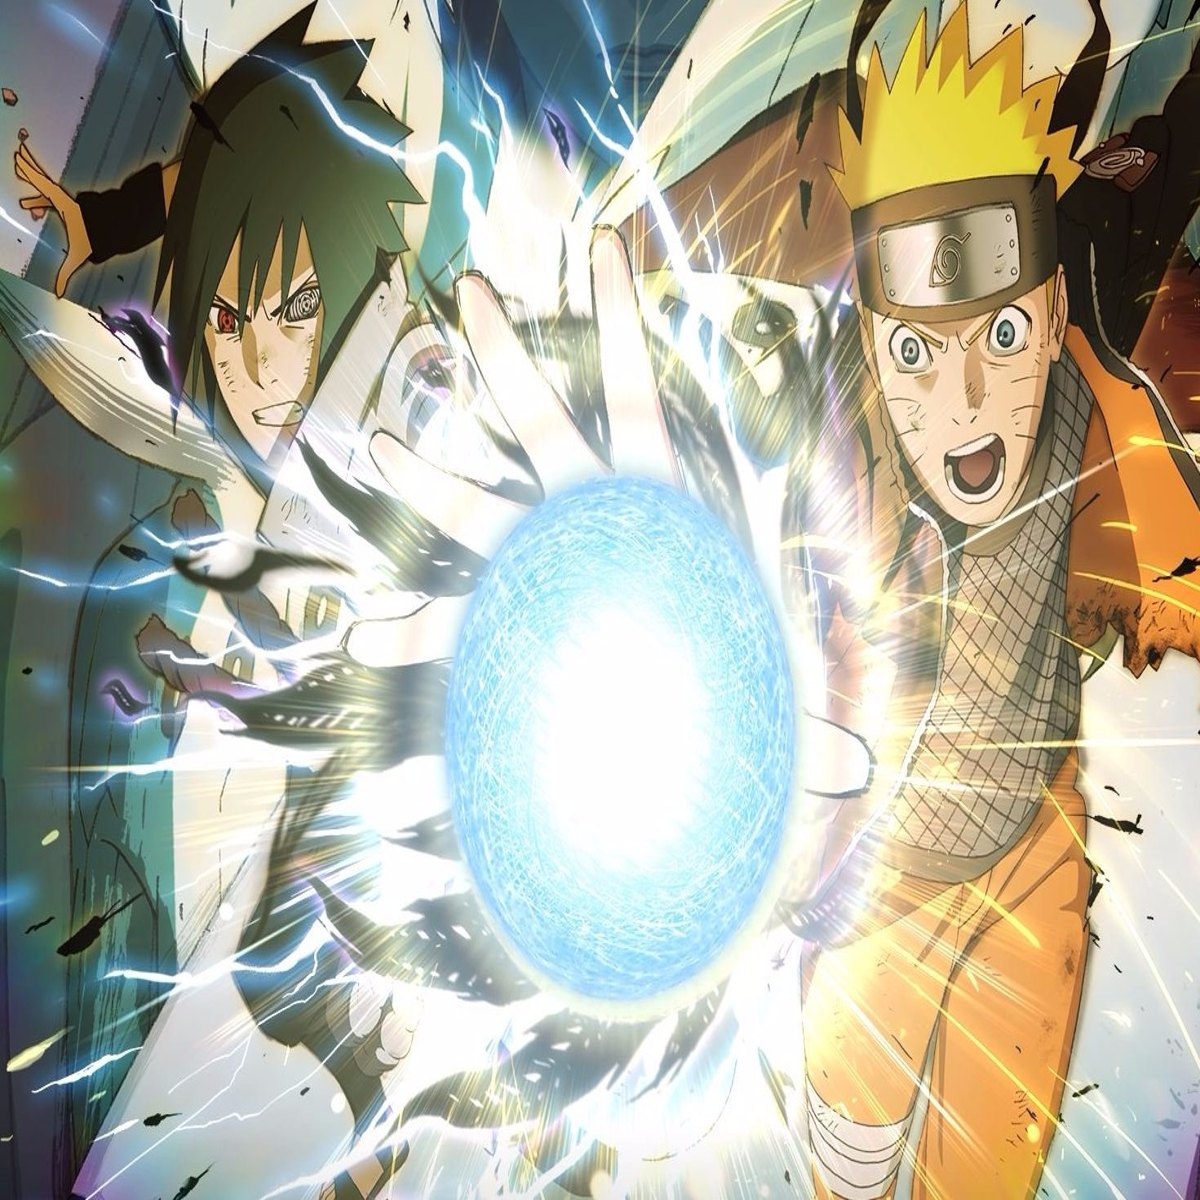 Naruto Vs Sasuke Best Clips of the Fight (4k/60fps) 